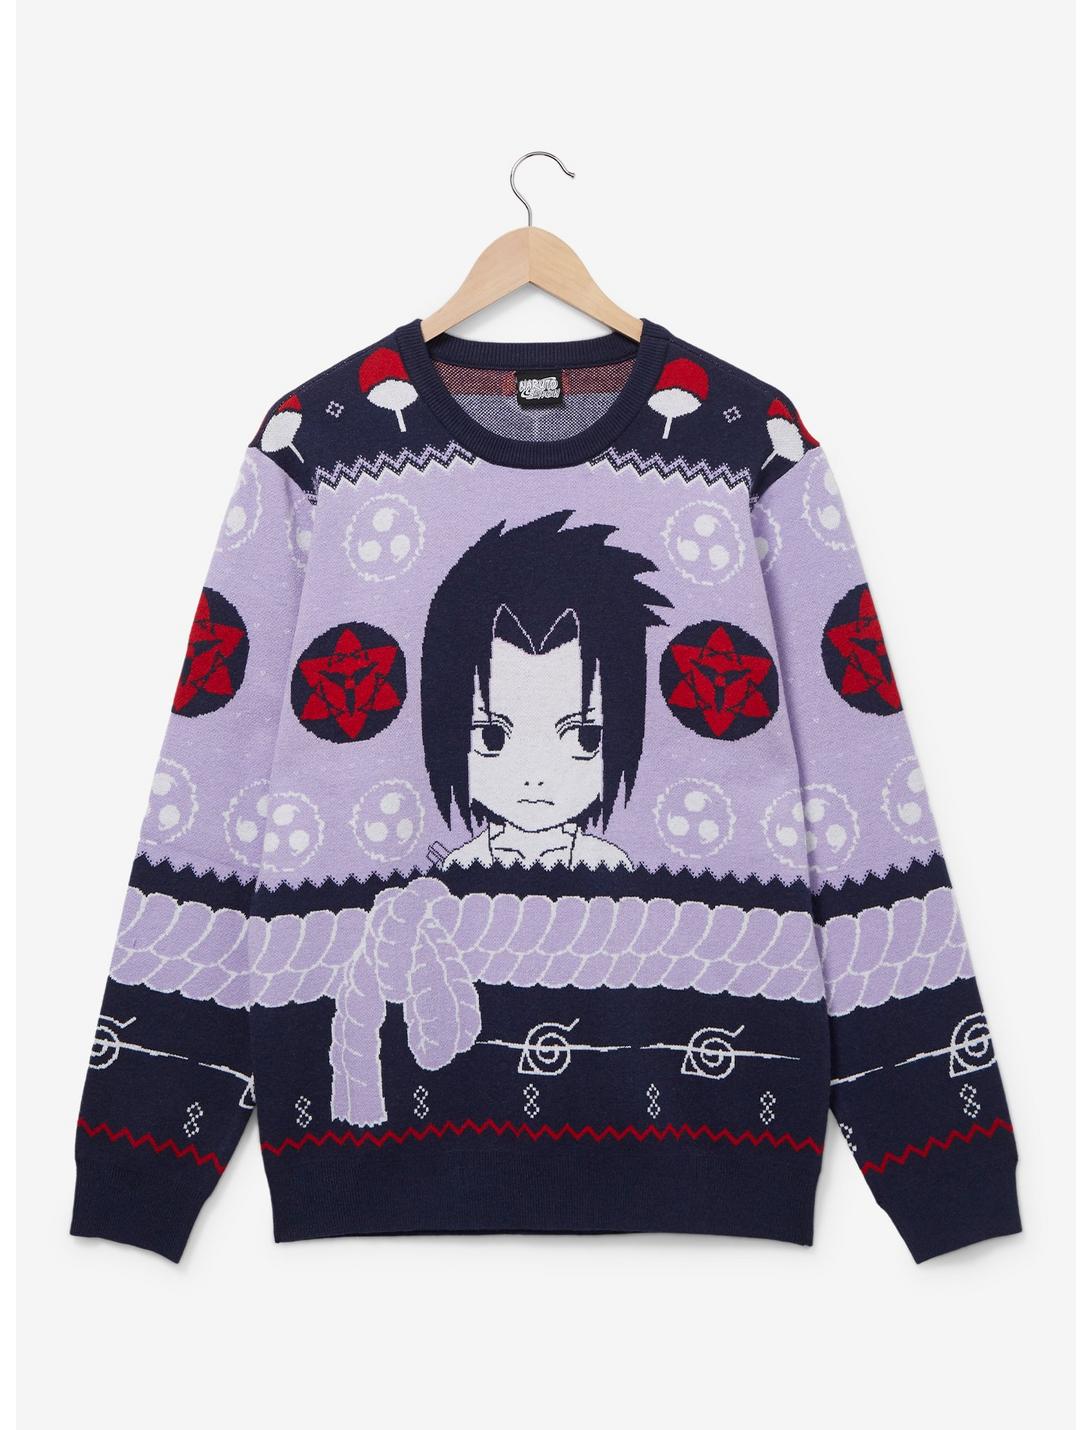 Naruto Shippuden Sasuke Uchiha Holiday Sweater - BoxLunch Exclusive, LILAC, hi-res